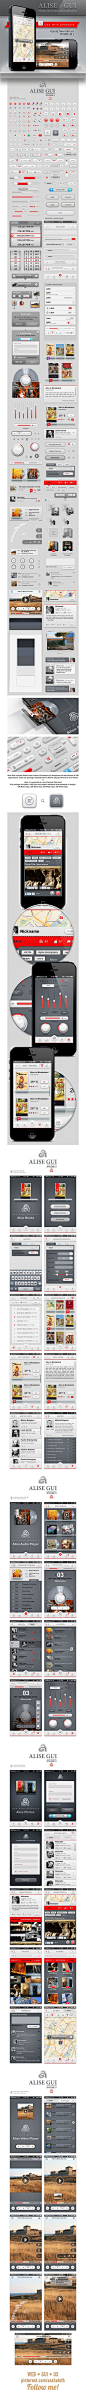 digital / Alise iPhone GUI Pack / for Retina Display by Vadim Pleshkov, via Behance ??? Alise GUI...